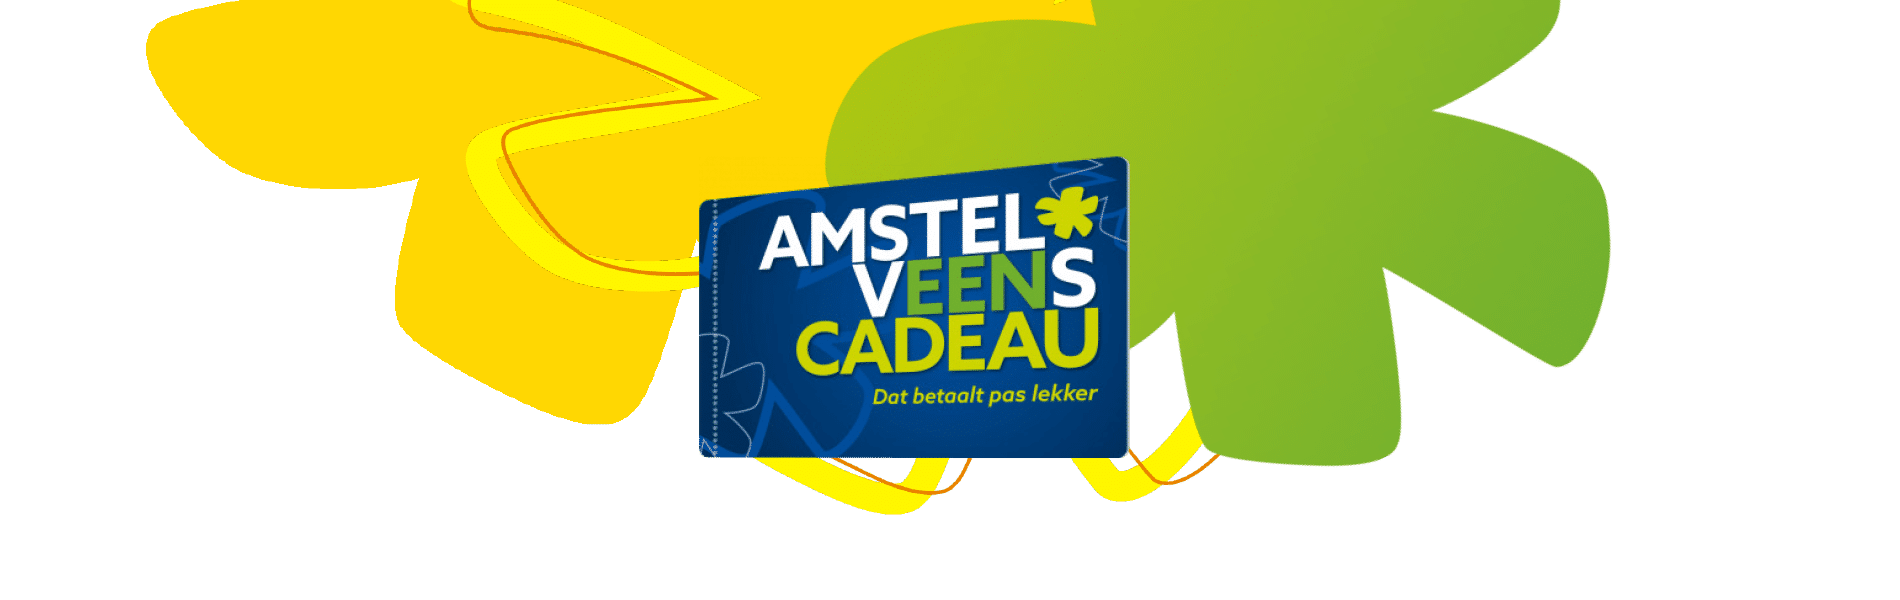 Amstelveens-cadeau-header-lente_actie